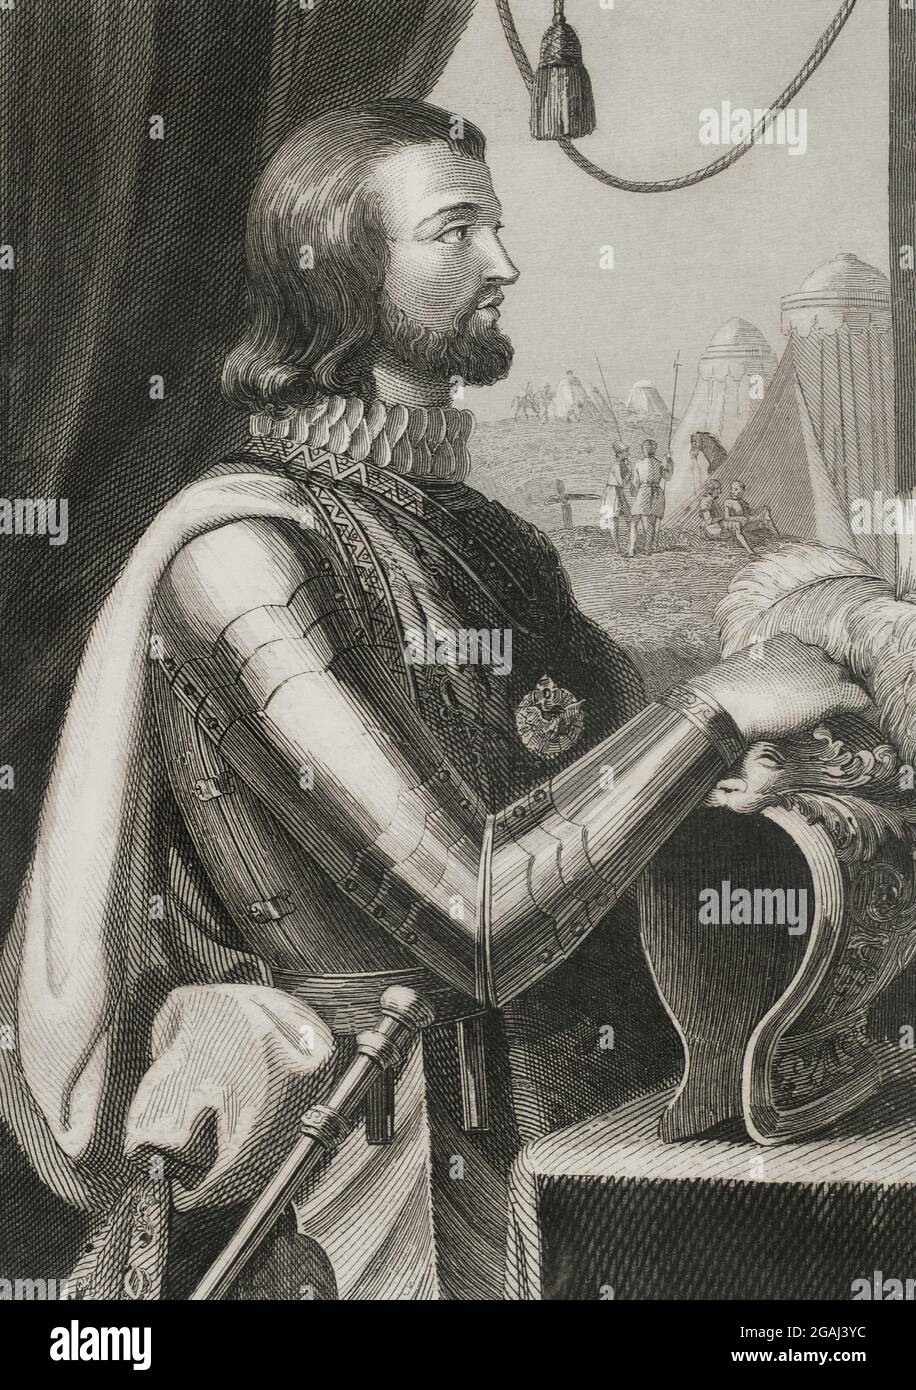 John I of Castile (1358-1390). King of Castile from 1379 until 1390. Portrait. Engraving by Antonio Roca. Las Glorias Nacionales, 1853. Author: Antonio Roca Sallent (1813-1864). Spanish engraver. Stock Photo